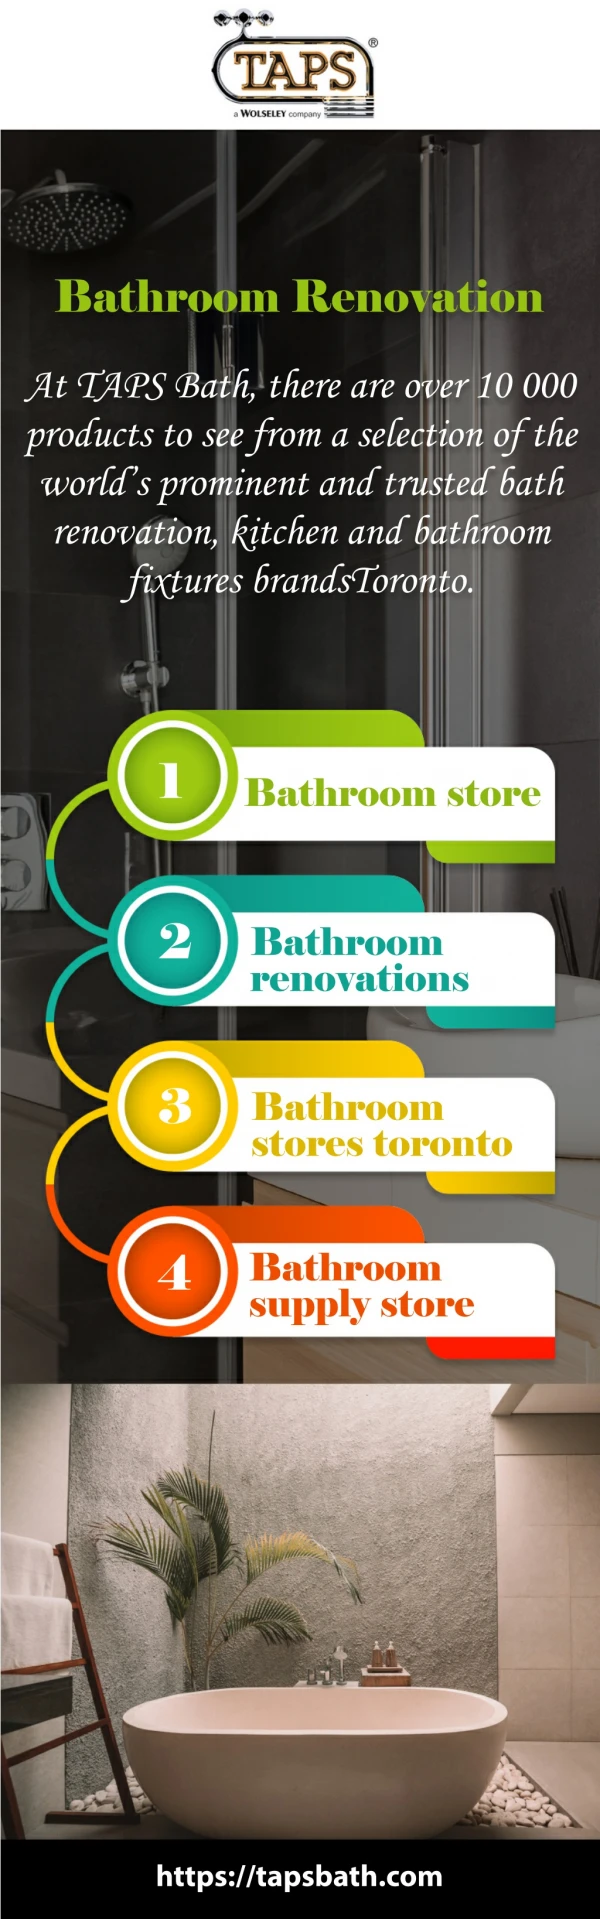 Bathroom Renovation and Fixture Store Toronto